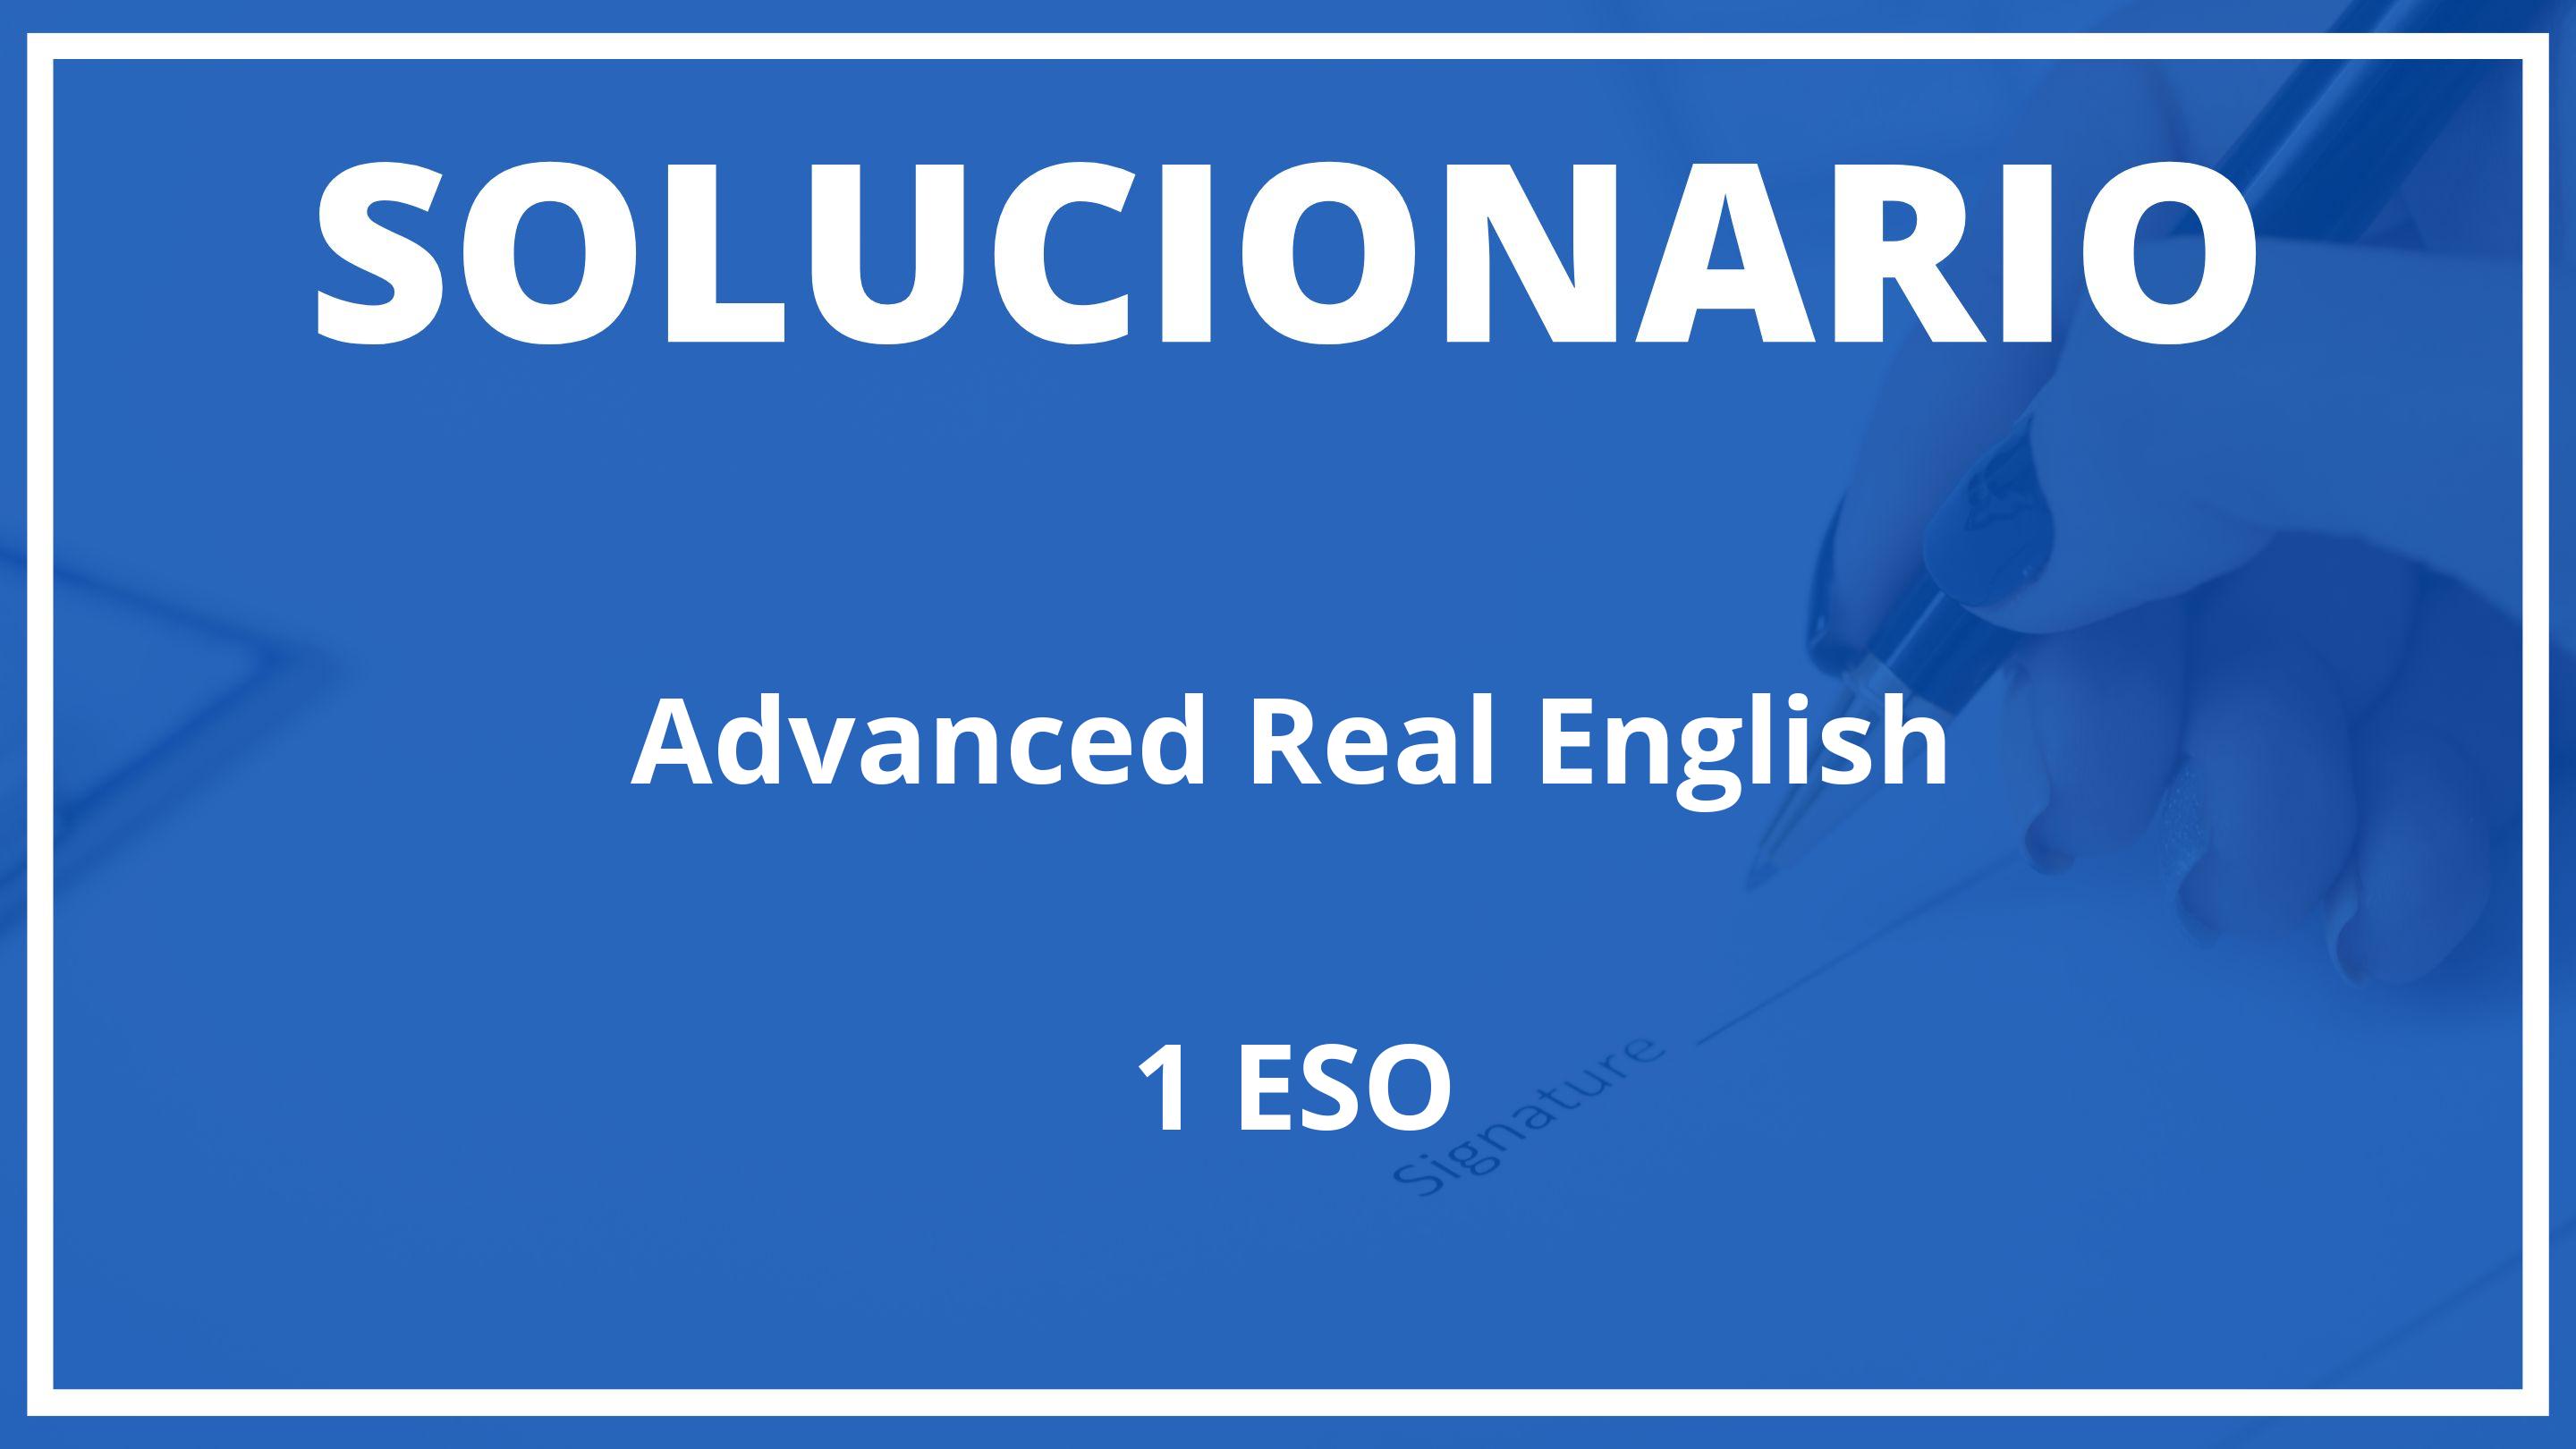 Solucionario Advanced Real English Burlington Books 1 ESO